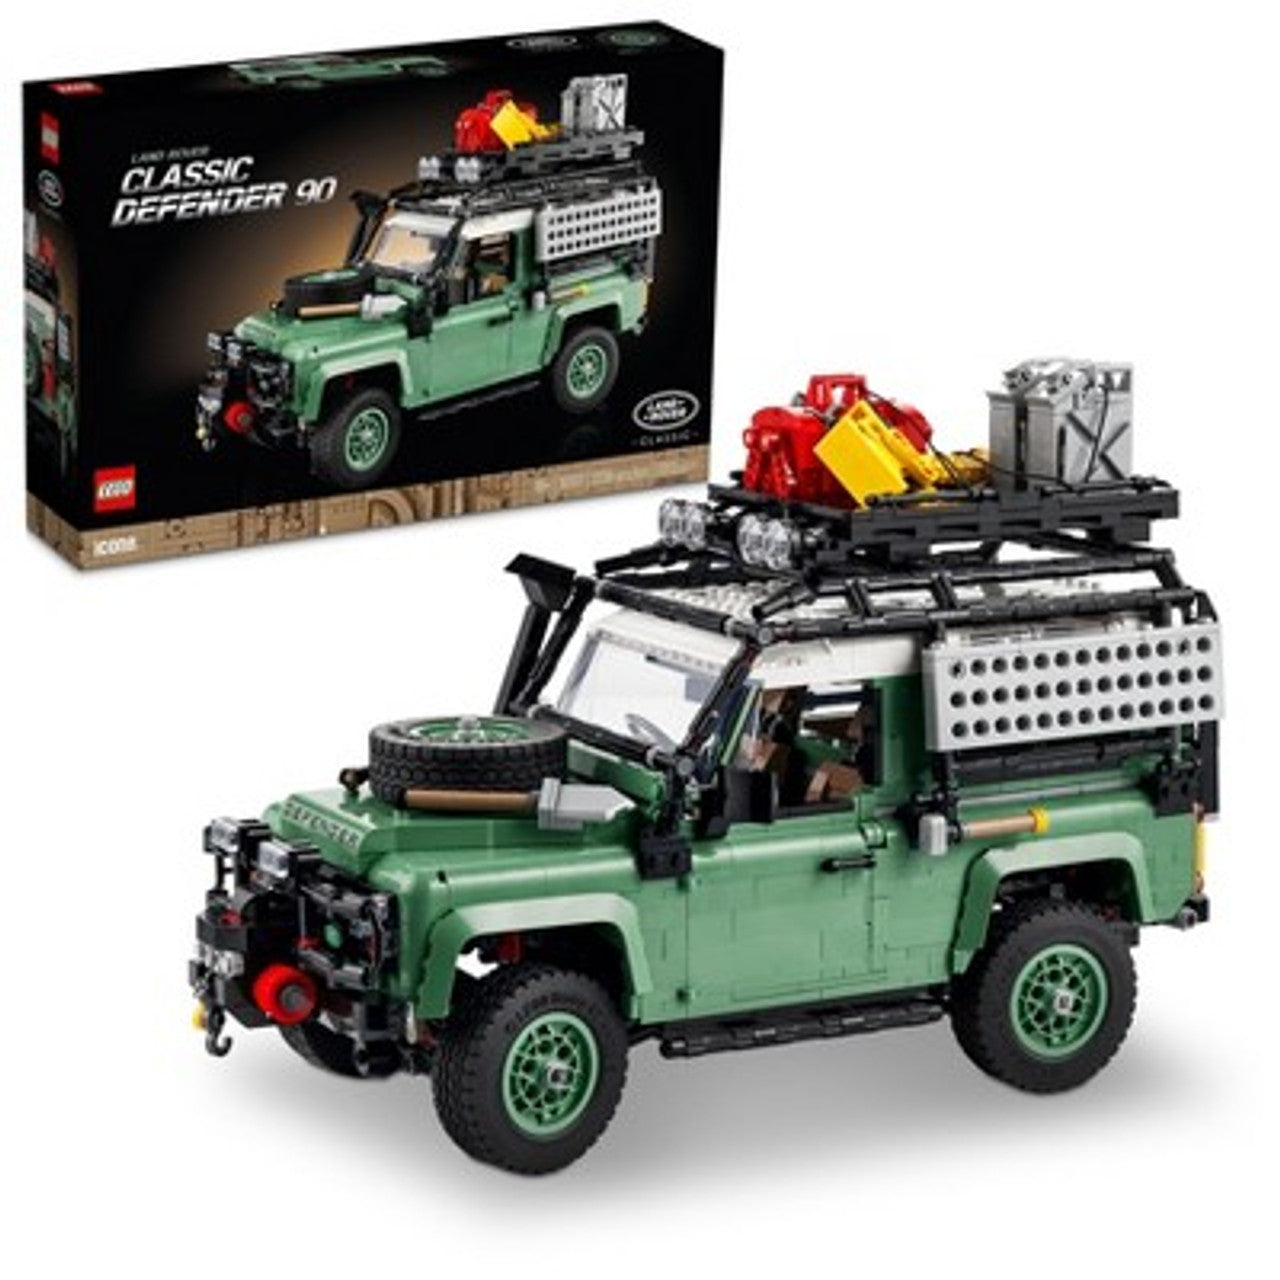 New - LEGO Icons Land Rover Classic Defender 90 Model Car Building Set 10317